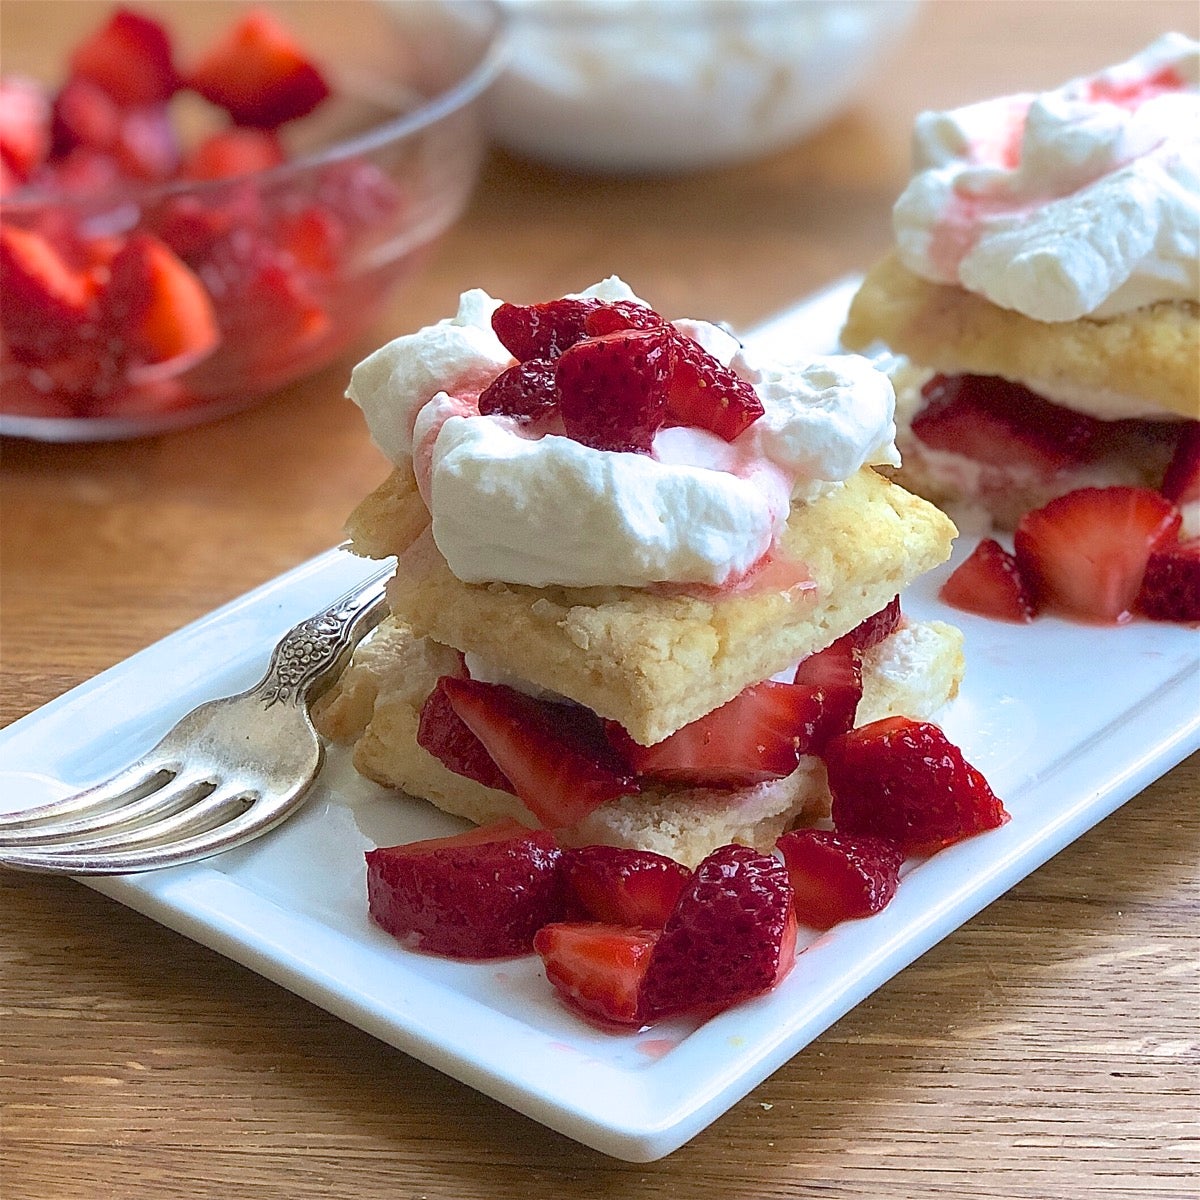 How to make great strawberry shortcake | King Arthur Baking